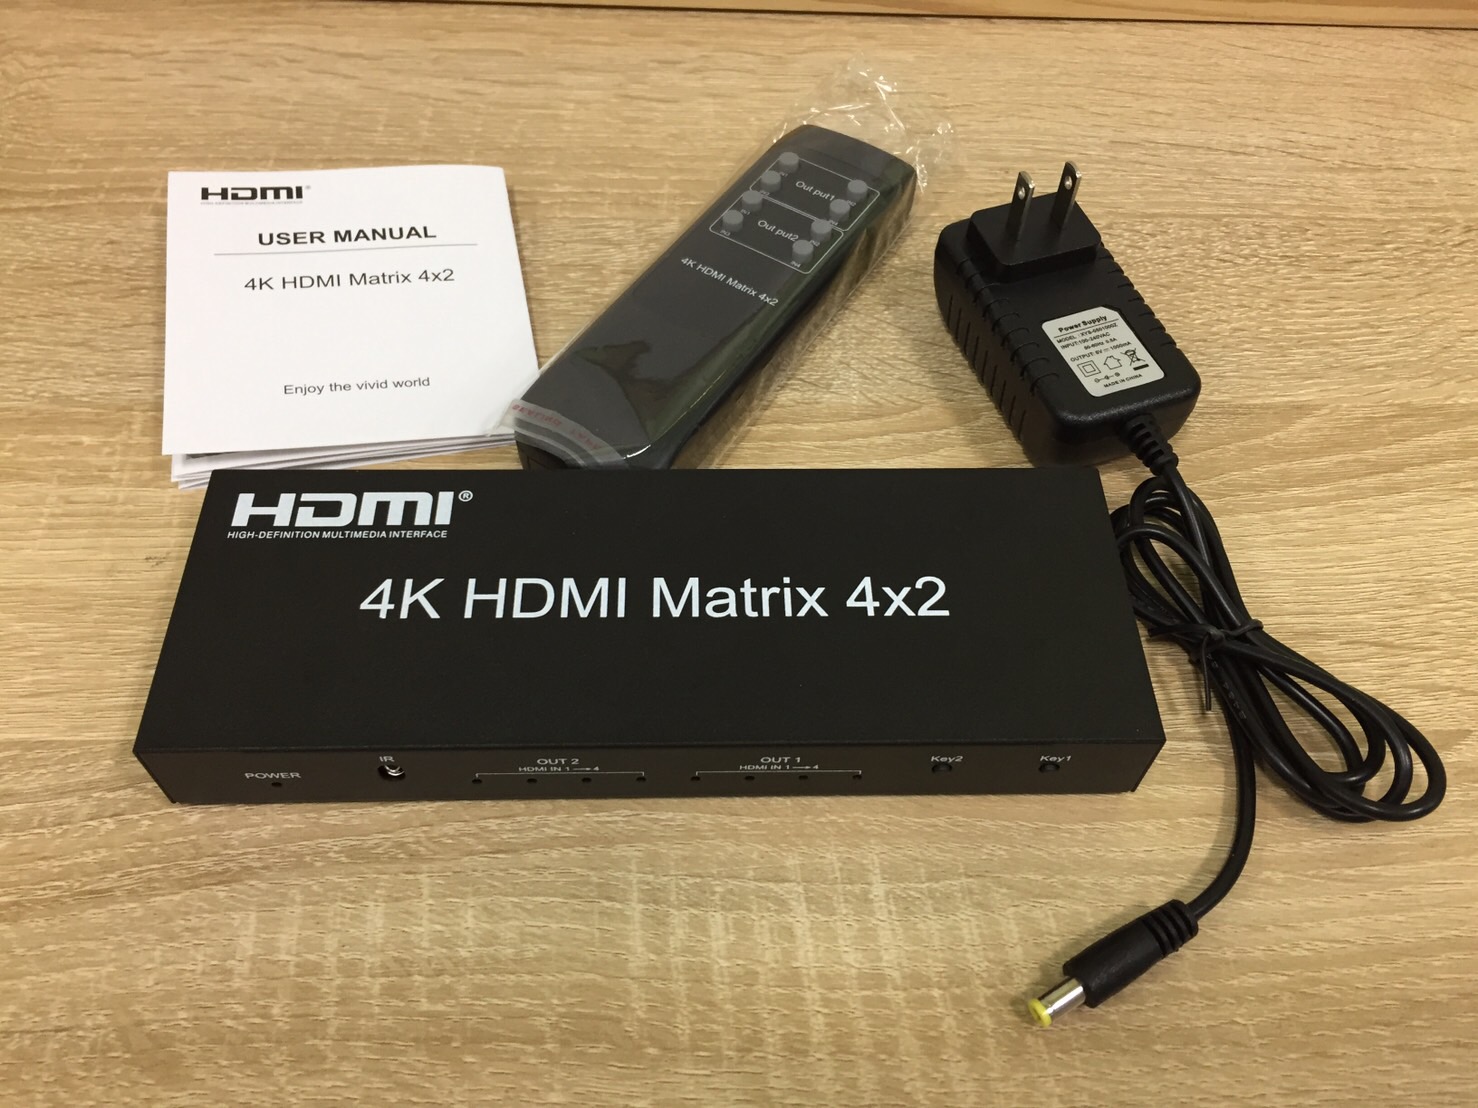 4K HDMI Matrix 4x2